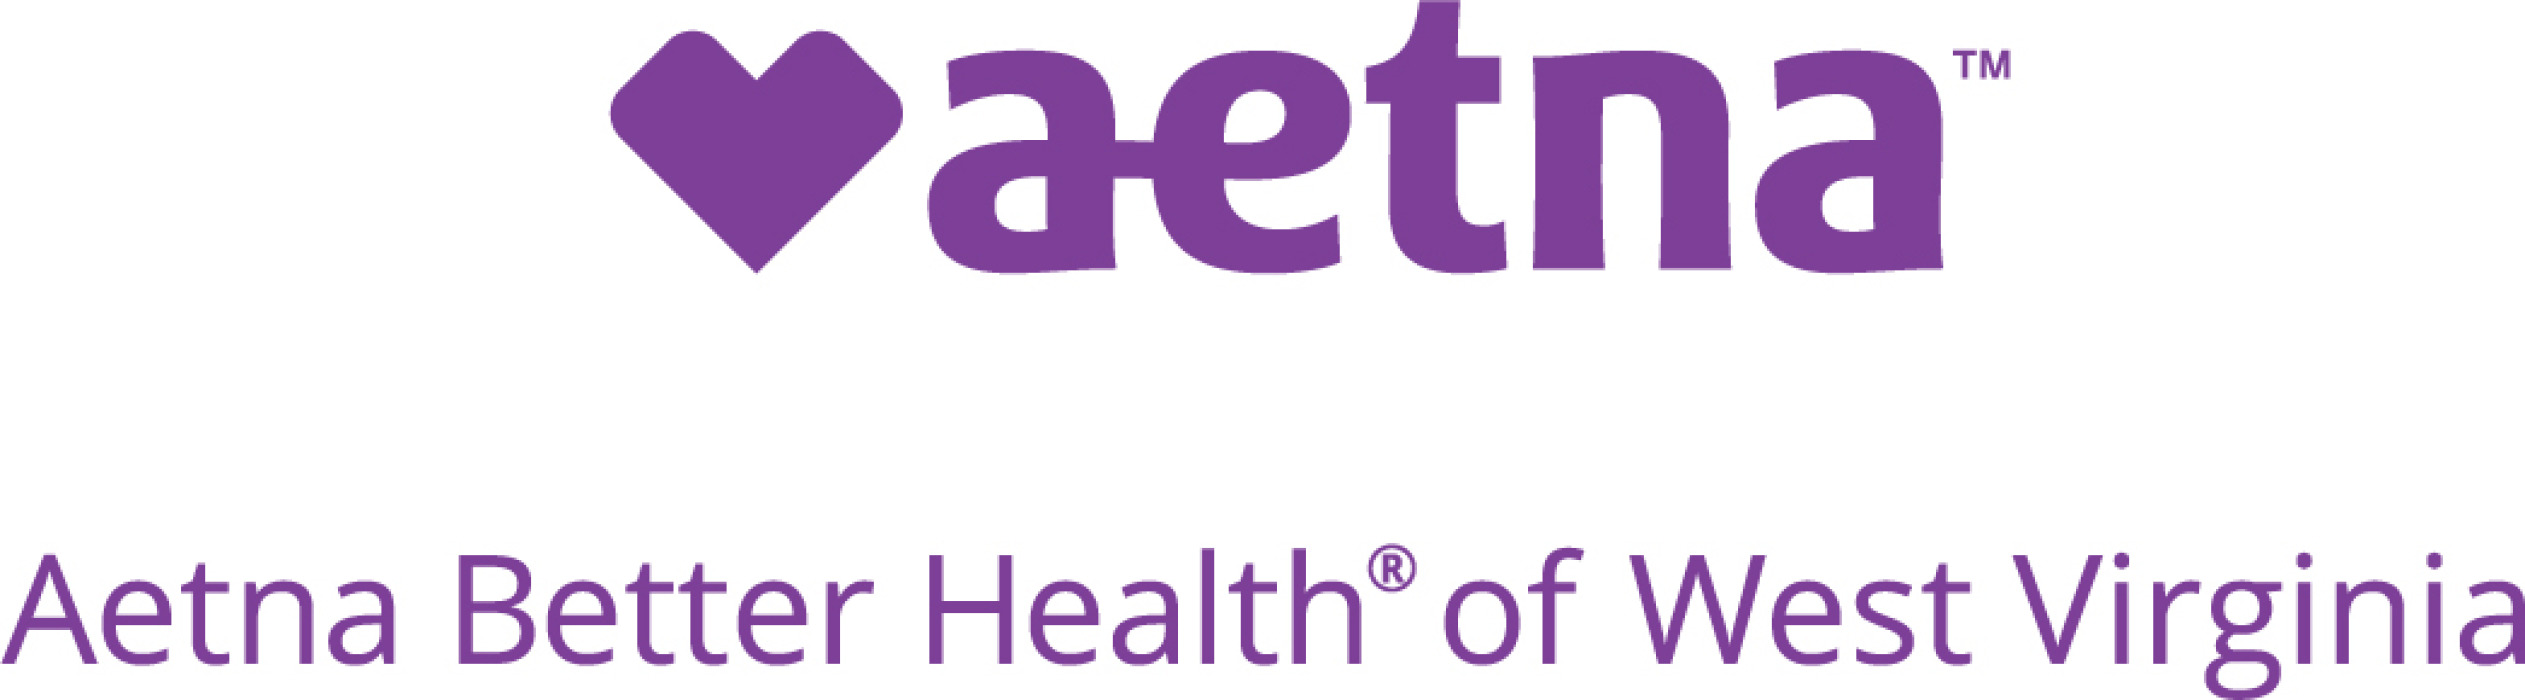 Aetna Better Health of West Virginia logo